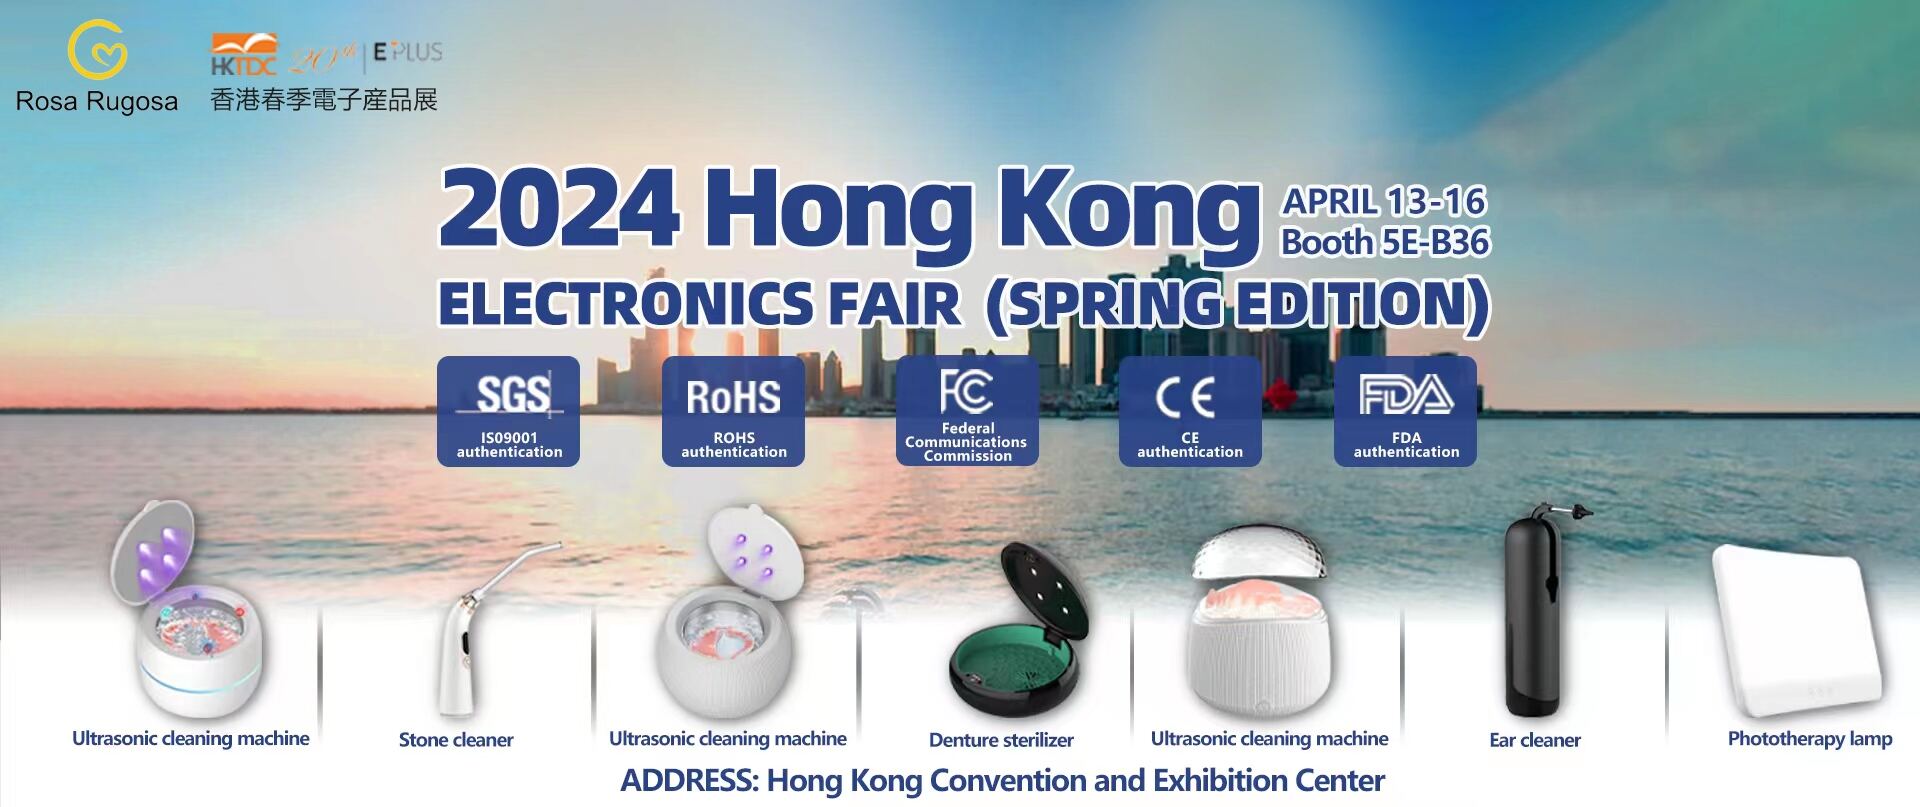 Huizhou Gold Rose Technology Co., Ltd. at the 2024 Hong Kong Spring Electronics Fair